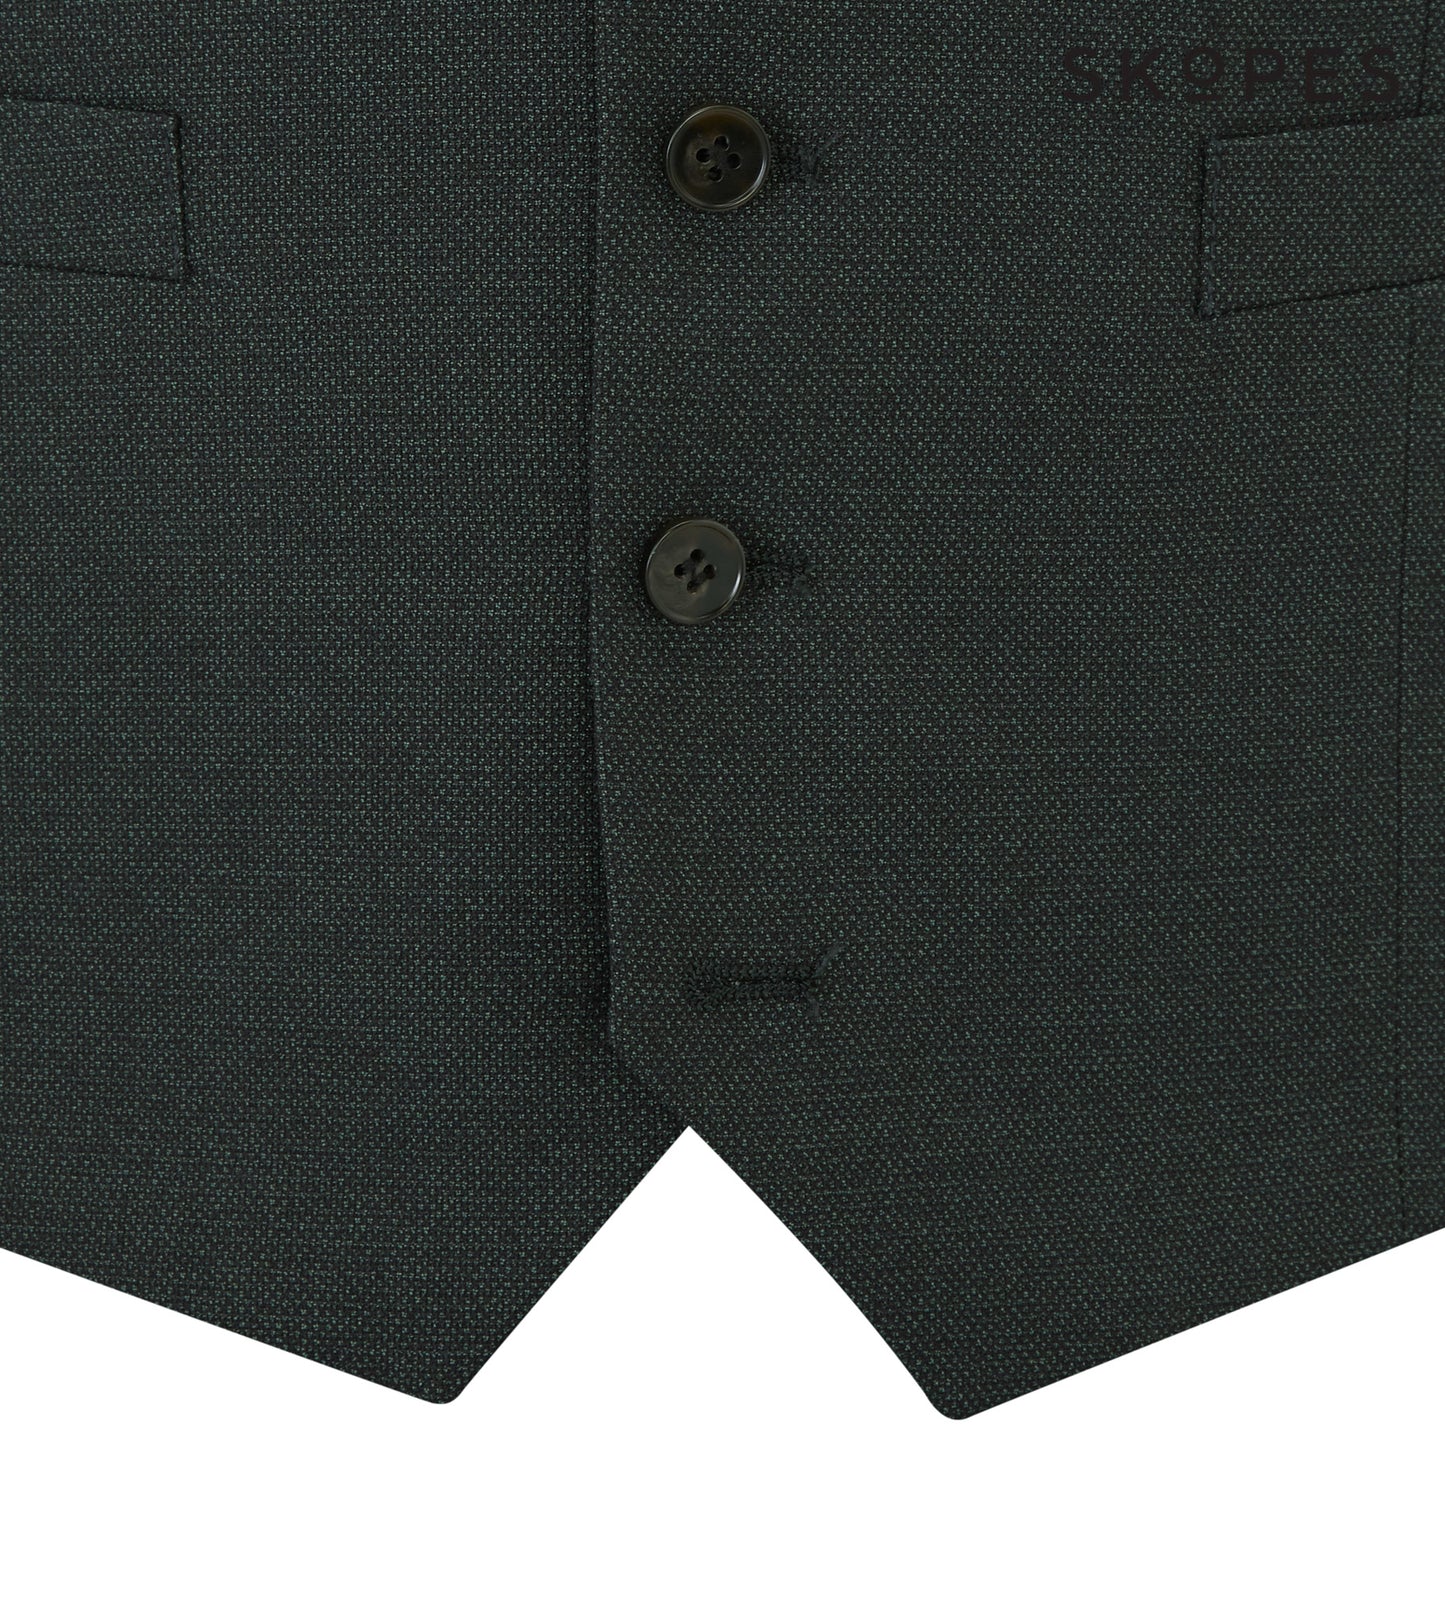 Dark Green 3 Piece Tailored Fit Suit - Waistcoat